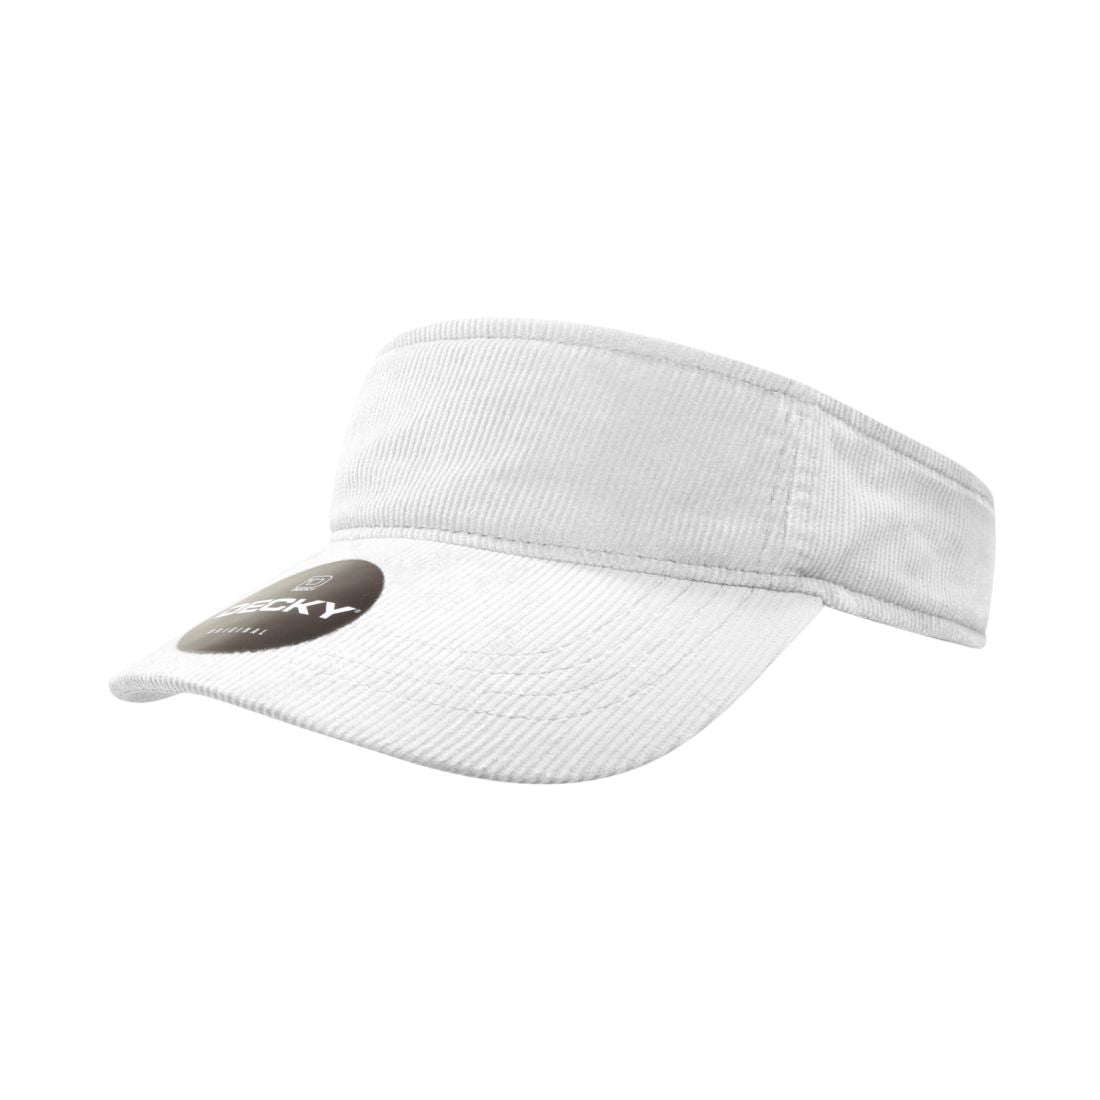 Decky 4004 Corduroy Visors Hats Sun Visor Caps Cotton Curved Structured Wholesale